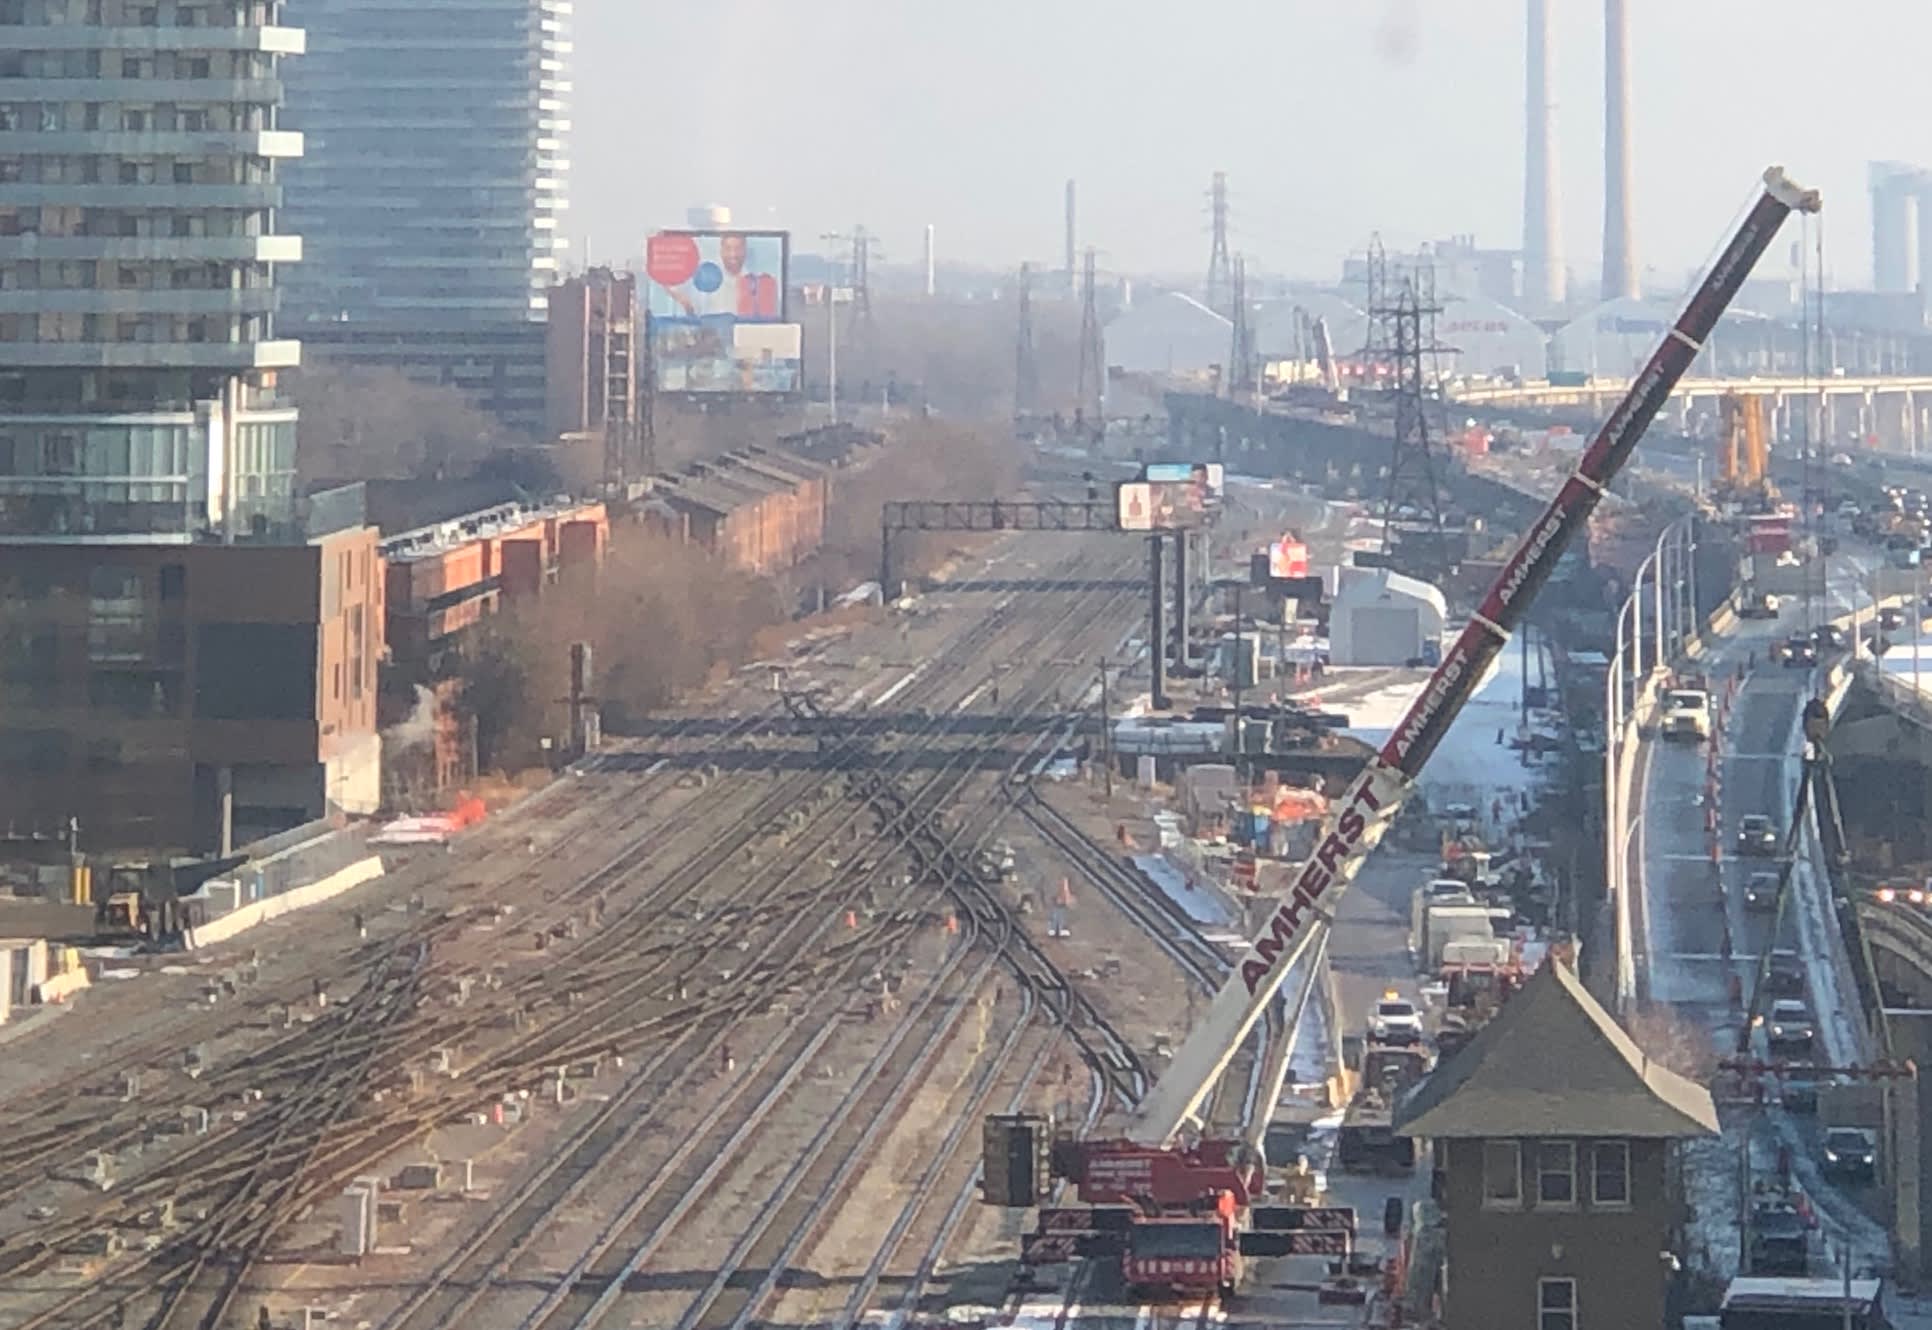 the crane beside the rail tracks.